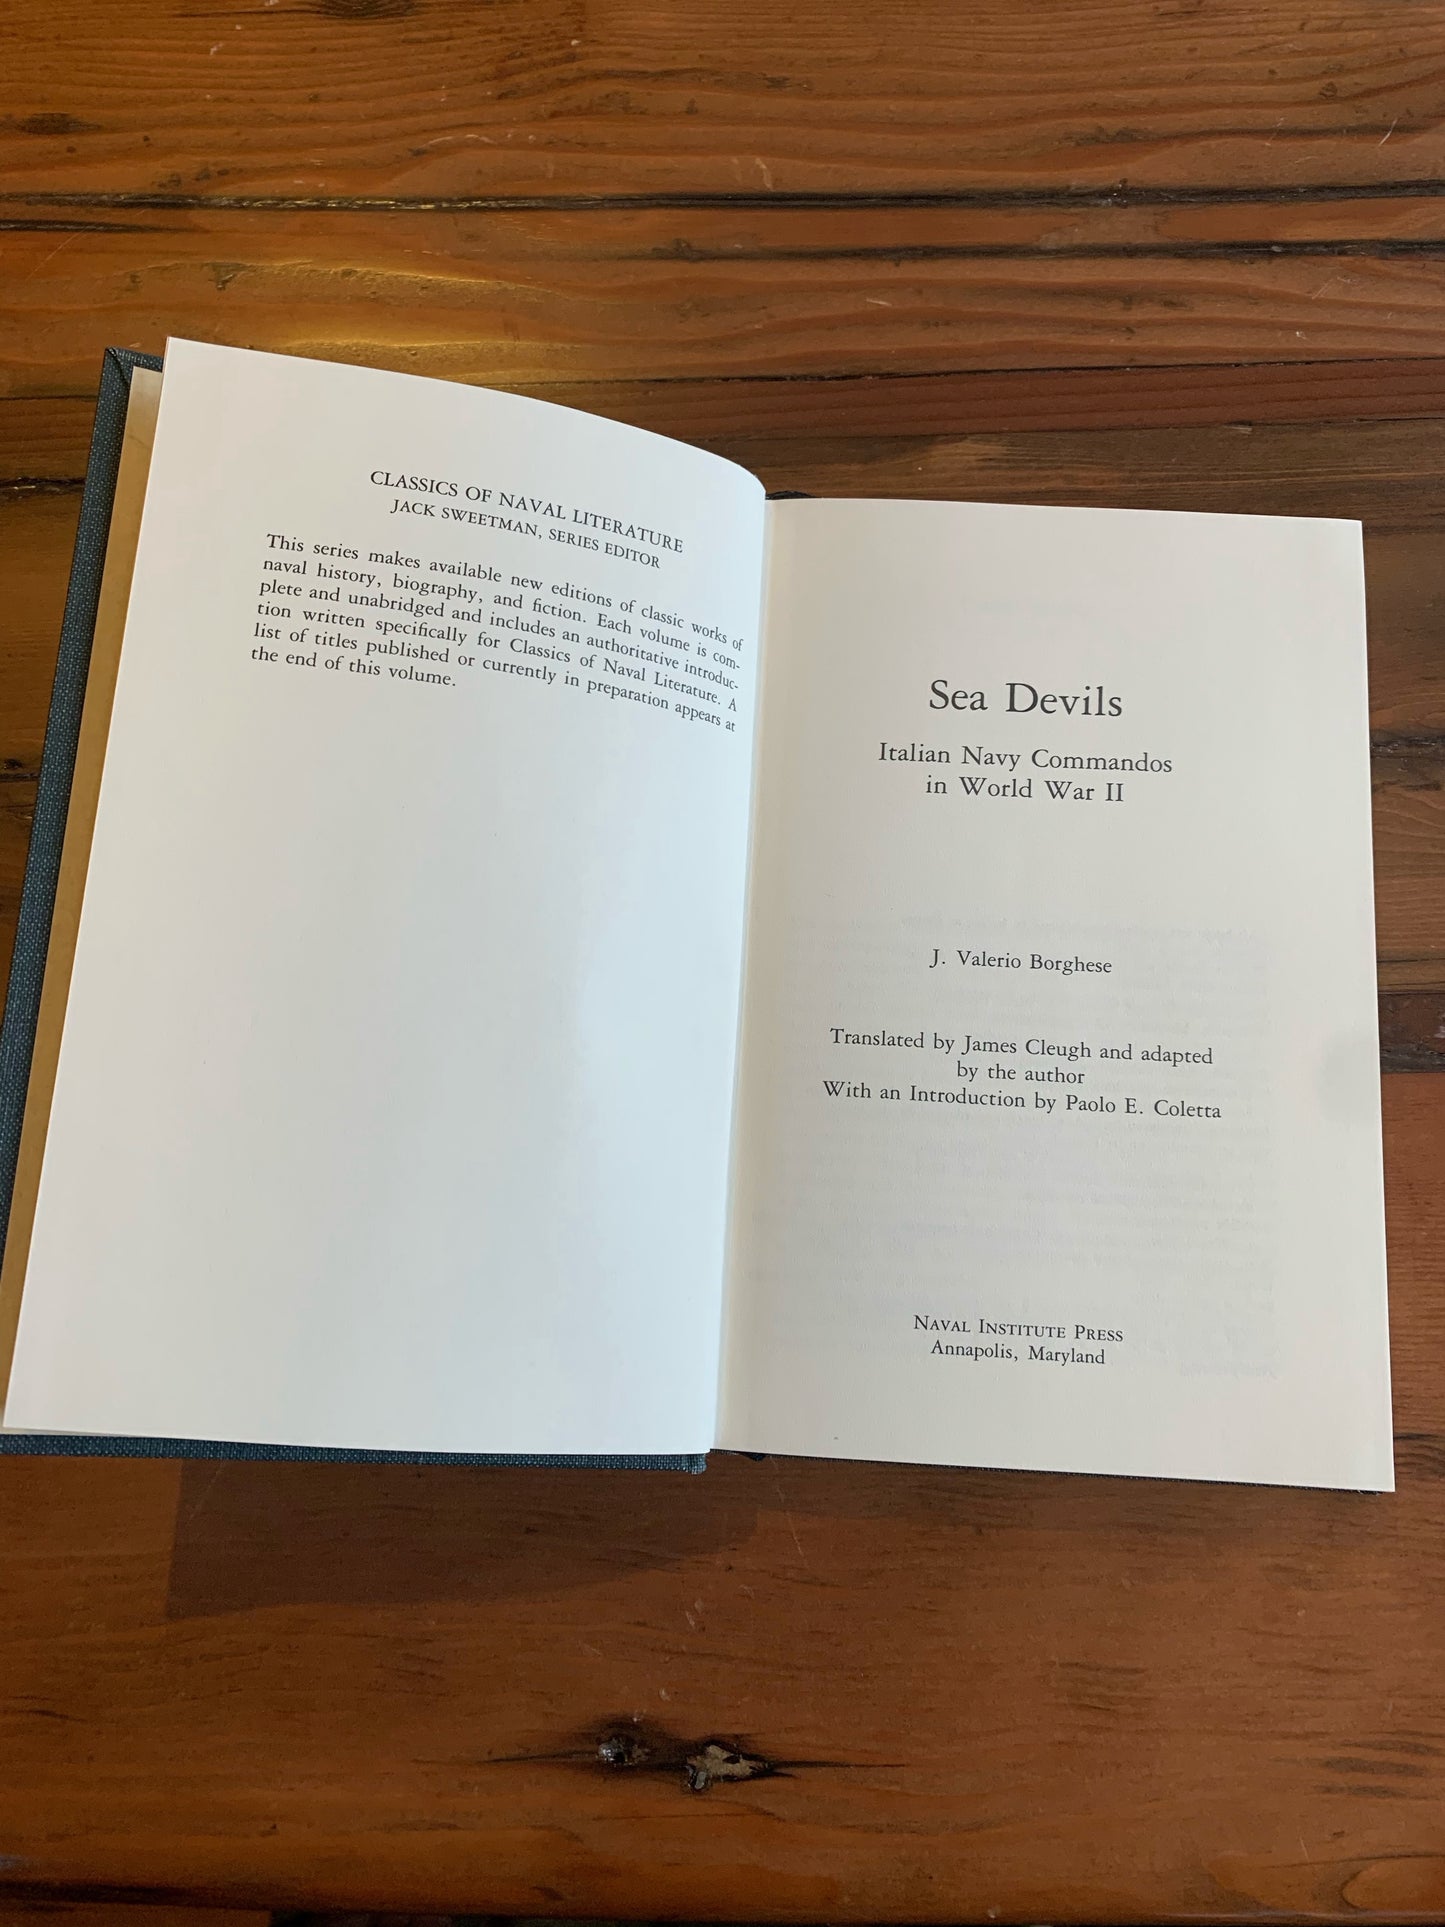 Book, "Sea Devils - Italian Navy Commandos in Word War II"